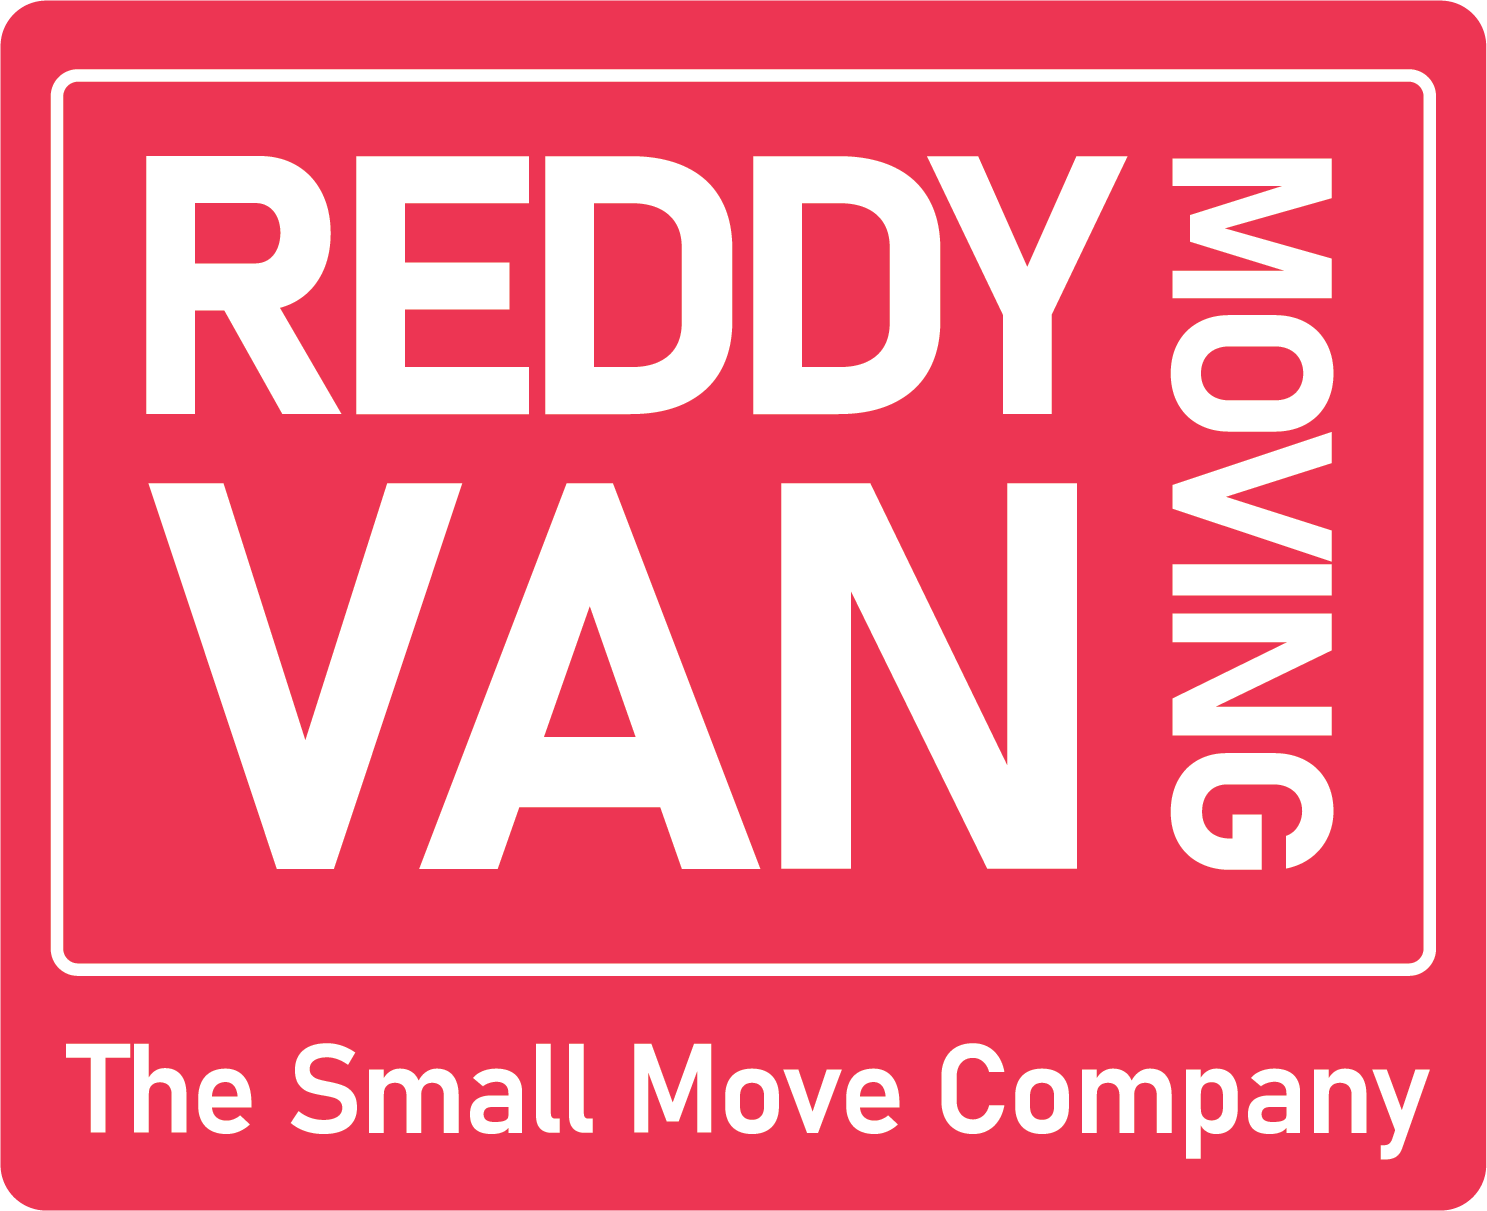 reddy van moving the small move company logo